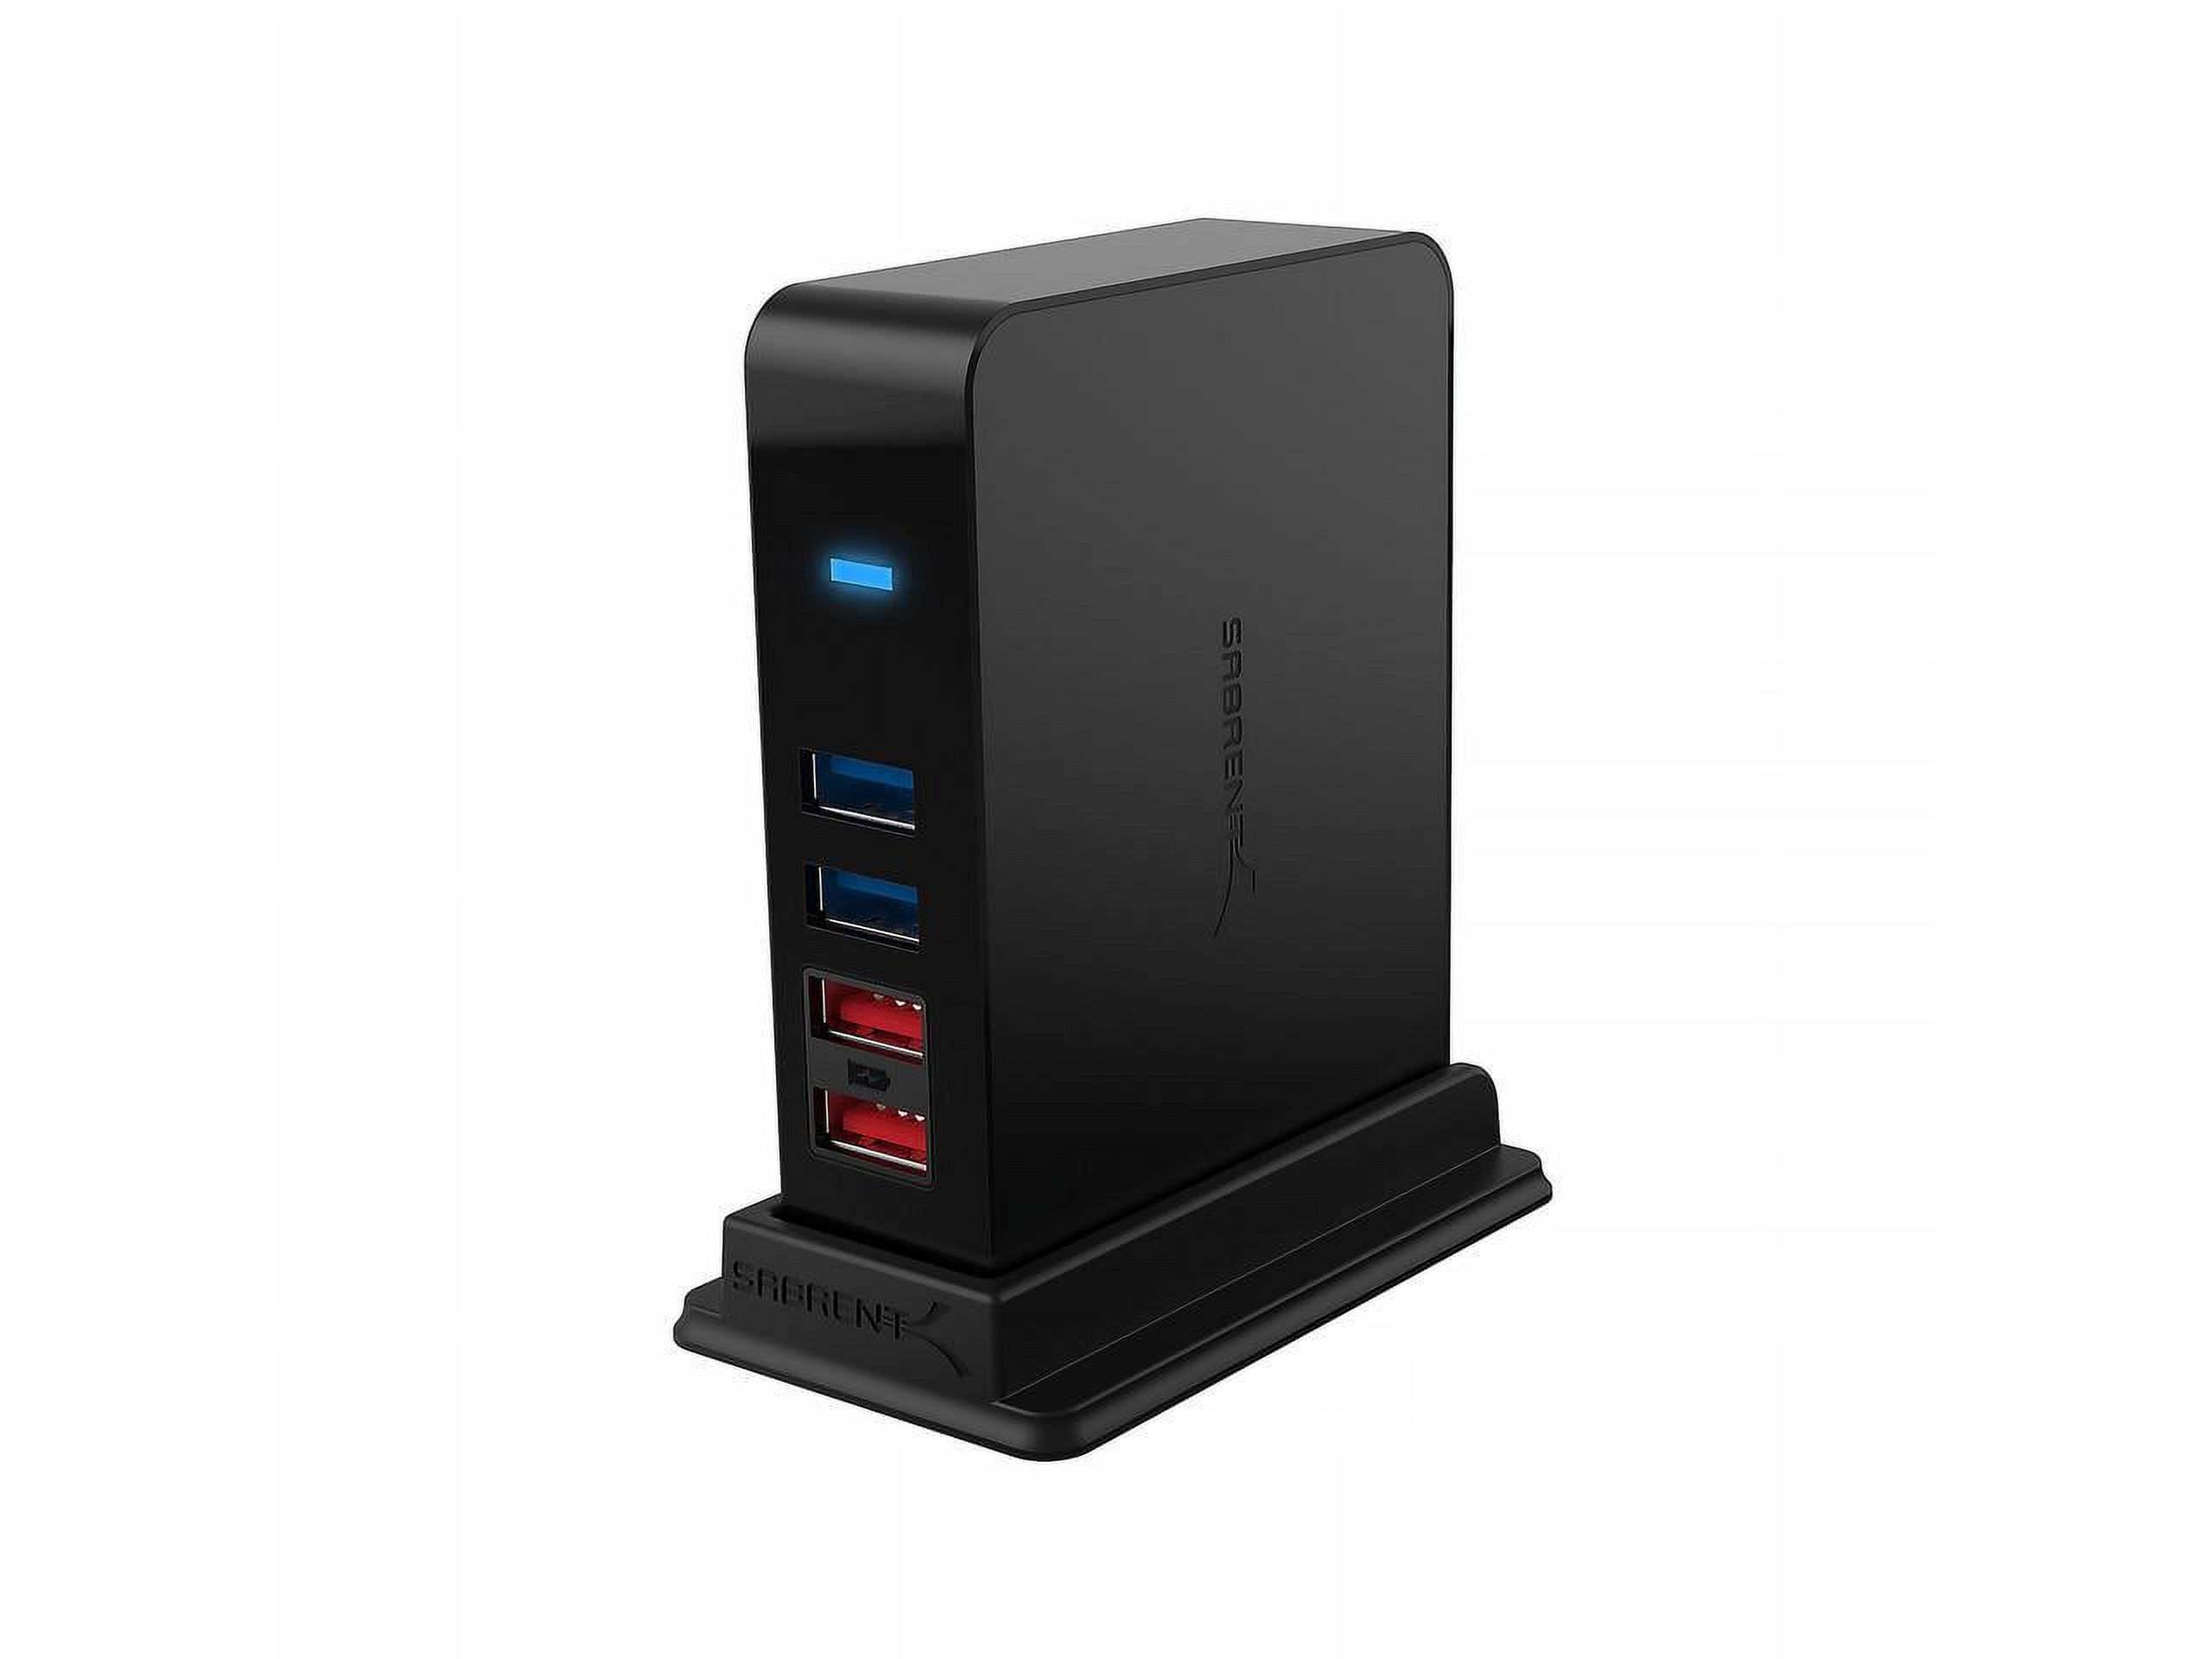 SABRENT 7 Port USB 3.0 HUB + 2 Charging Ports with 12V/4A Power Adapter [Black] (HB-U930) - image 1 of 9